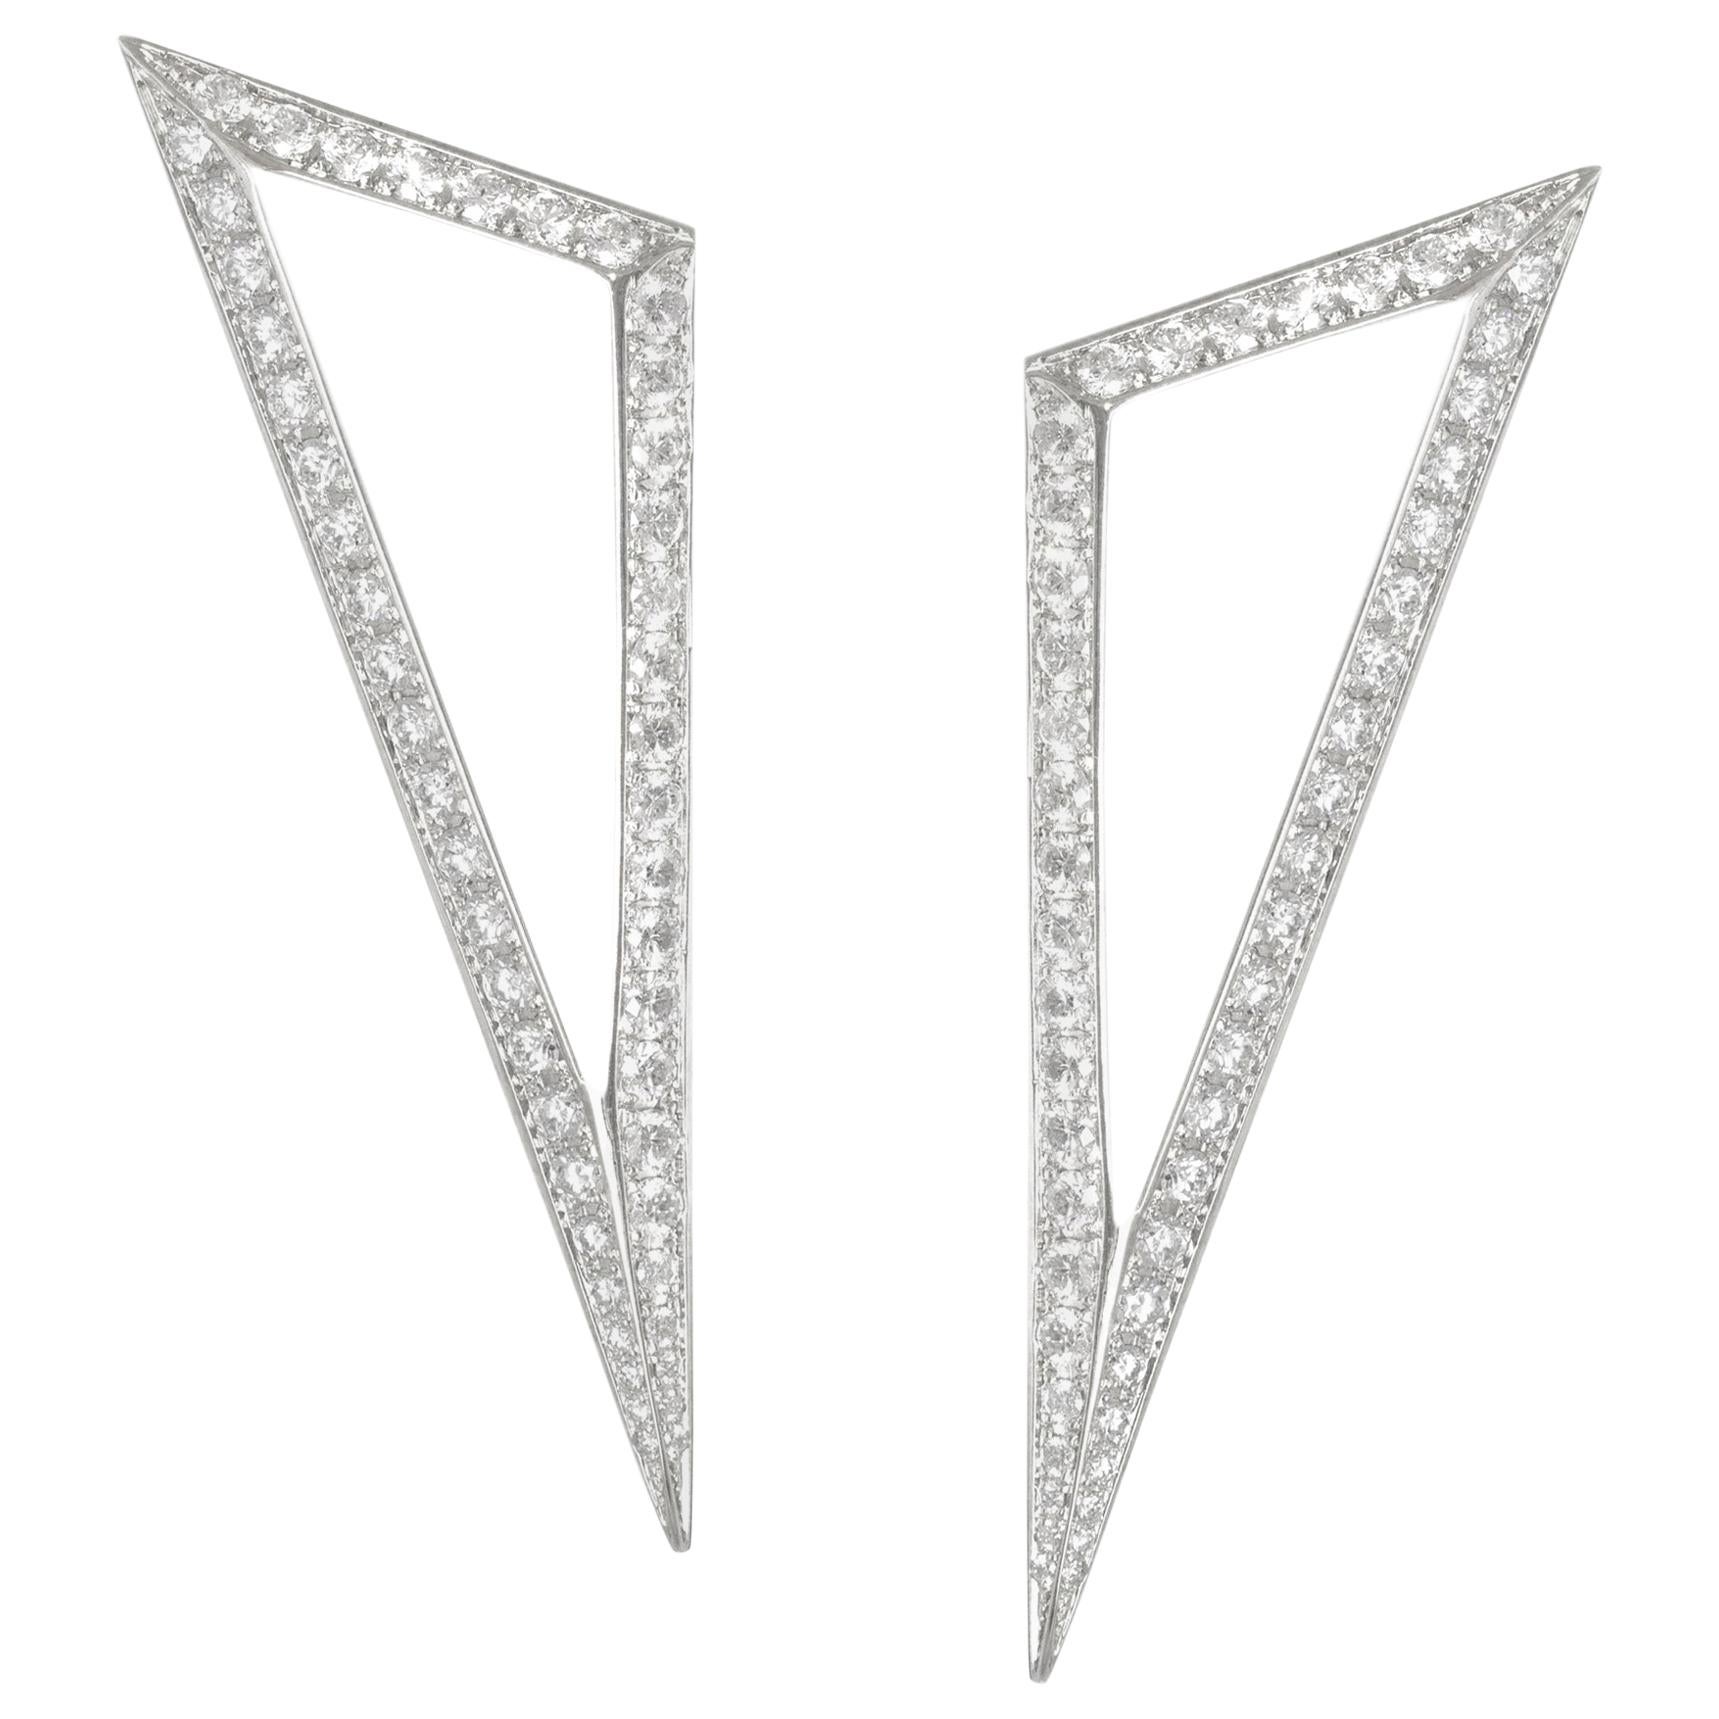 Ralph Masri Modernist Triangular Diamond Earrings